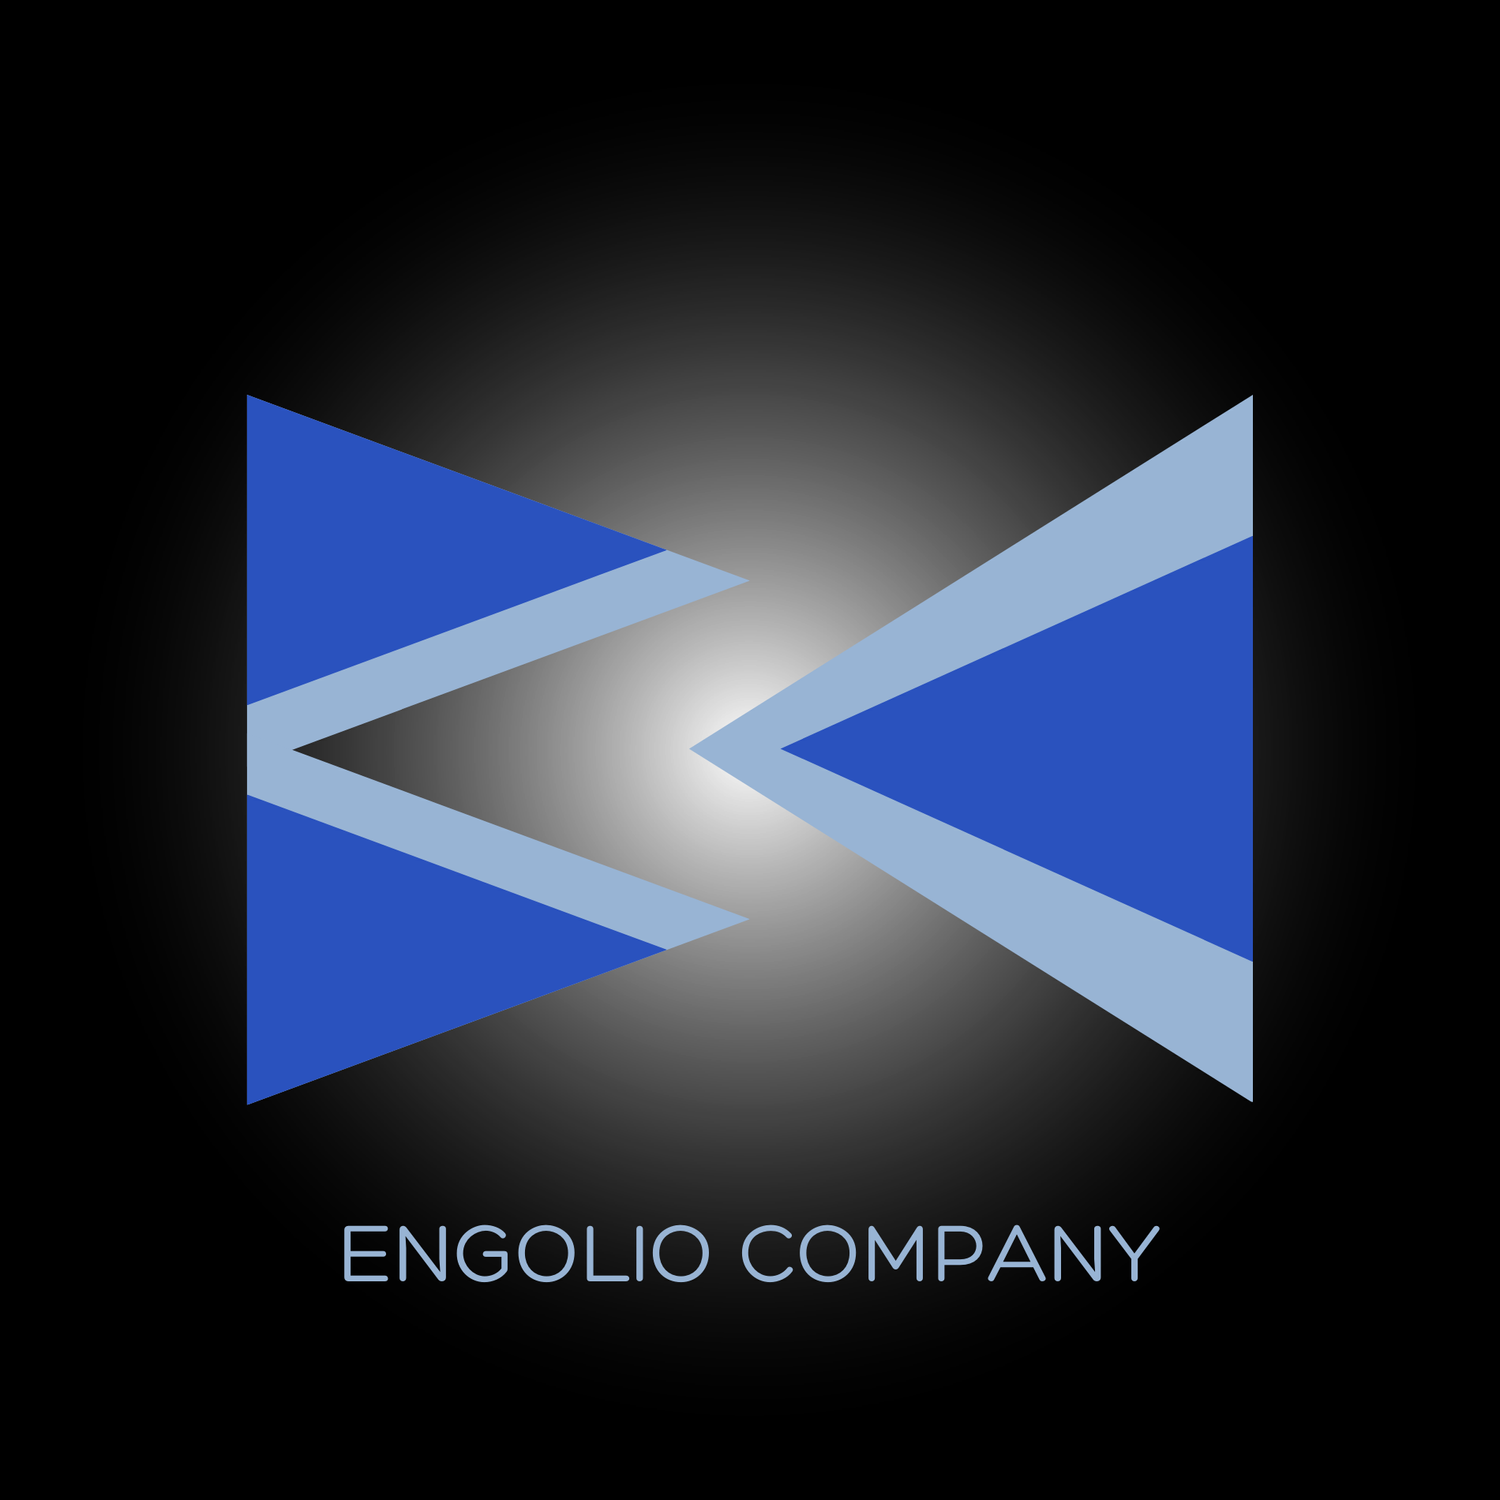 ENGOLIO COMPANY